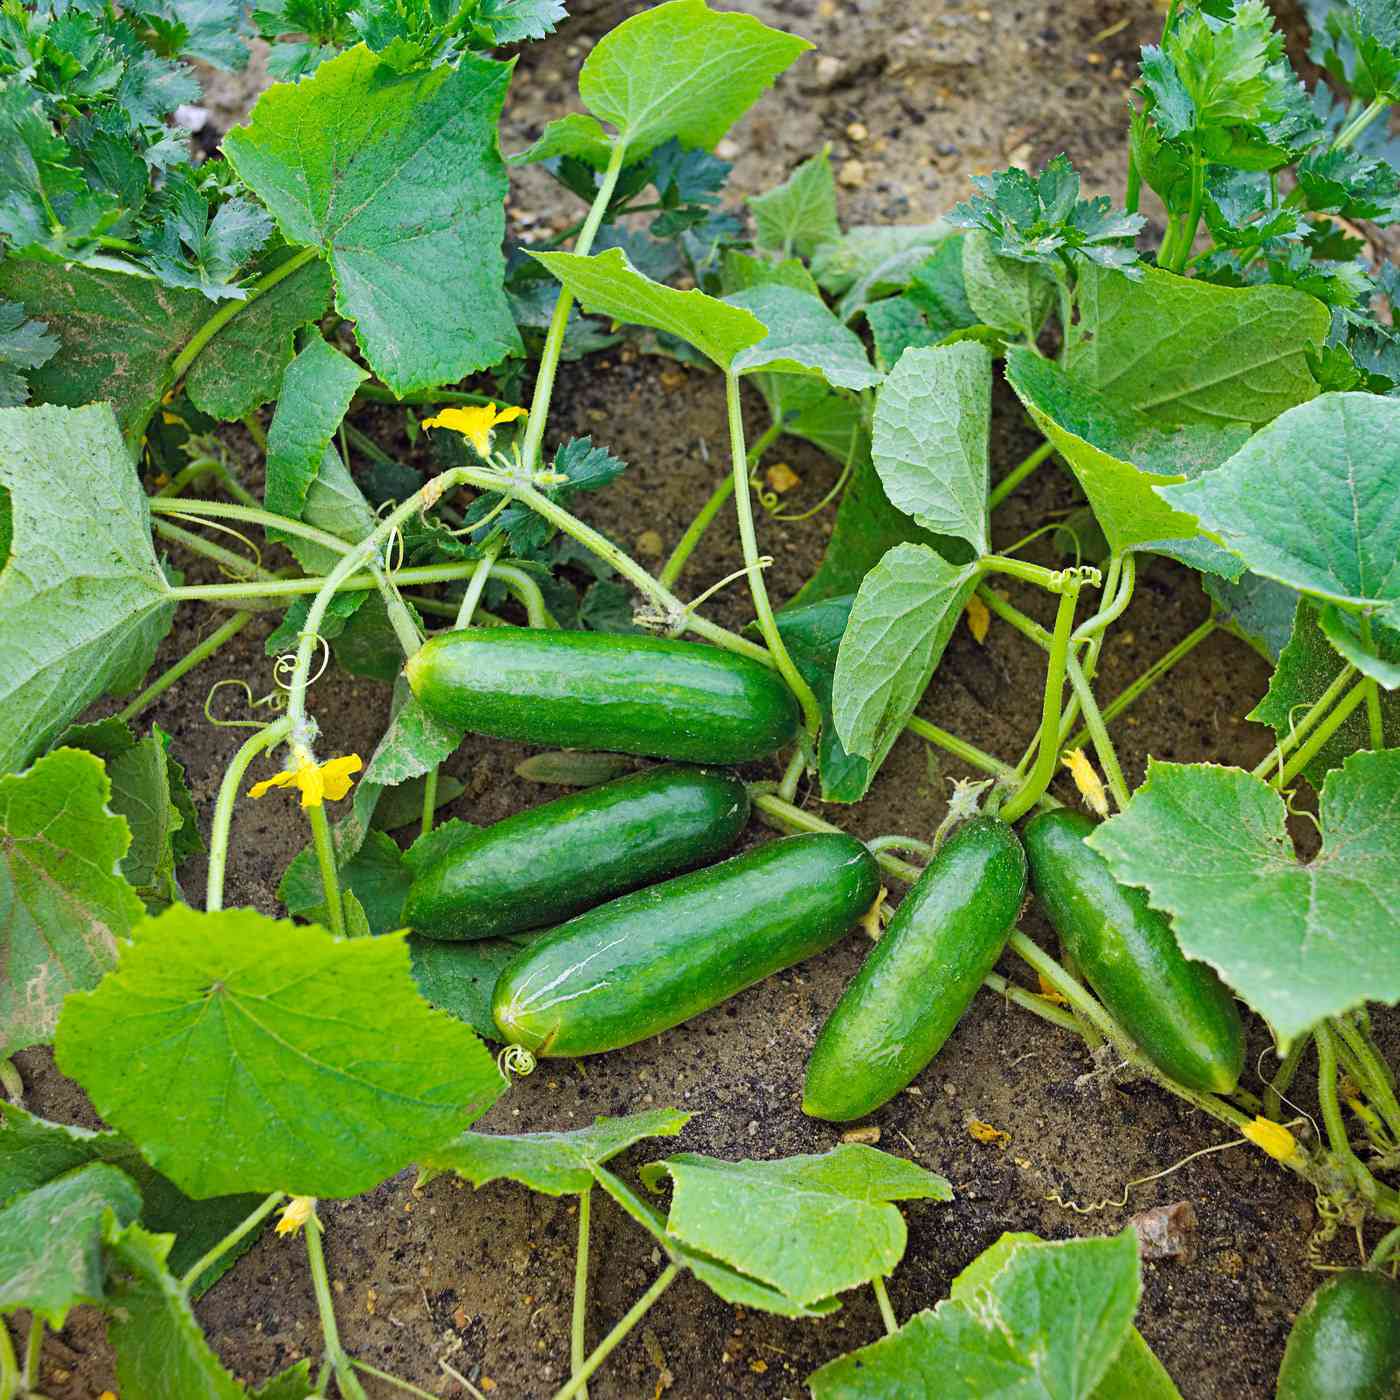 'Green Fingers' cucumber